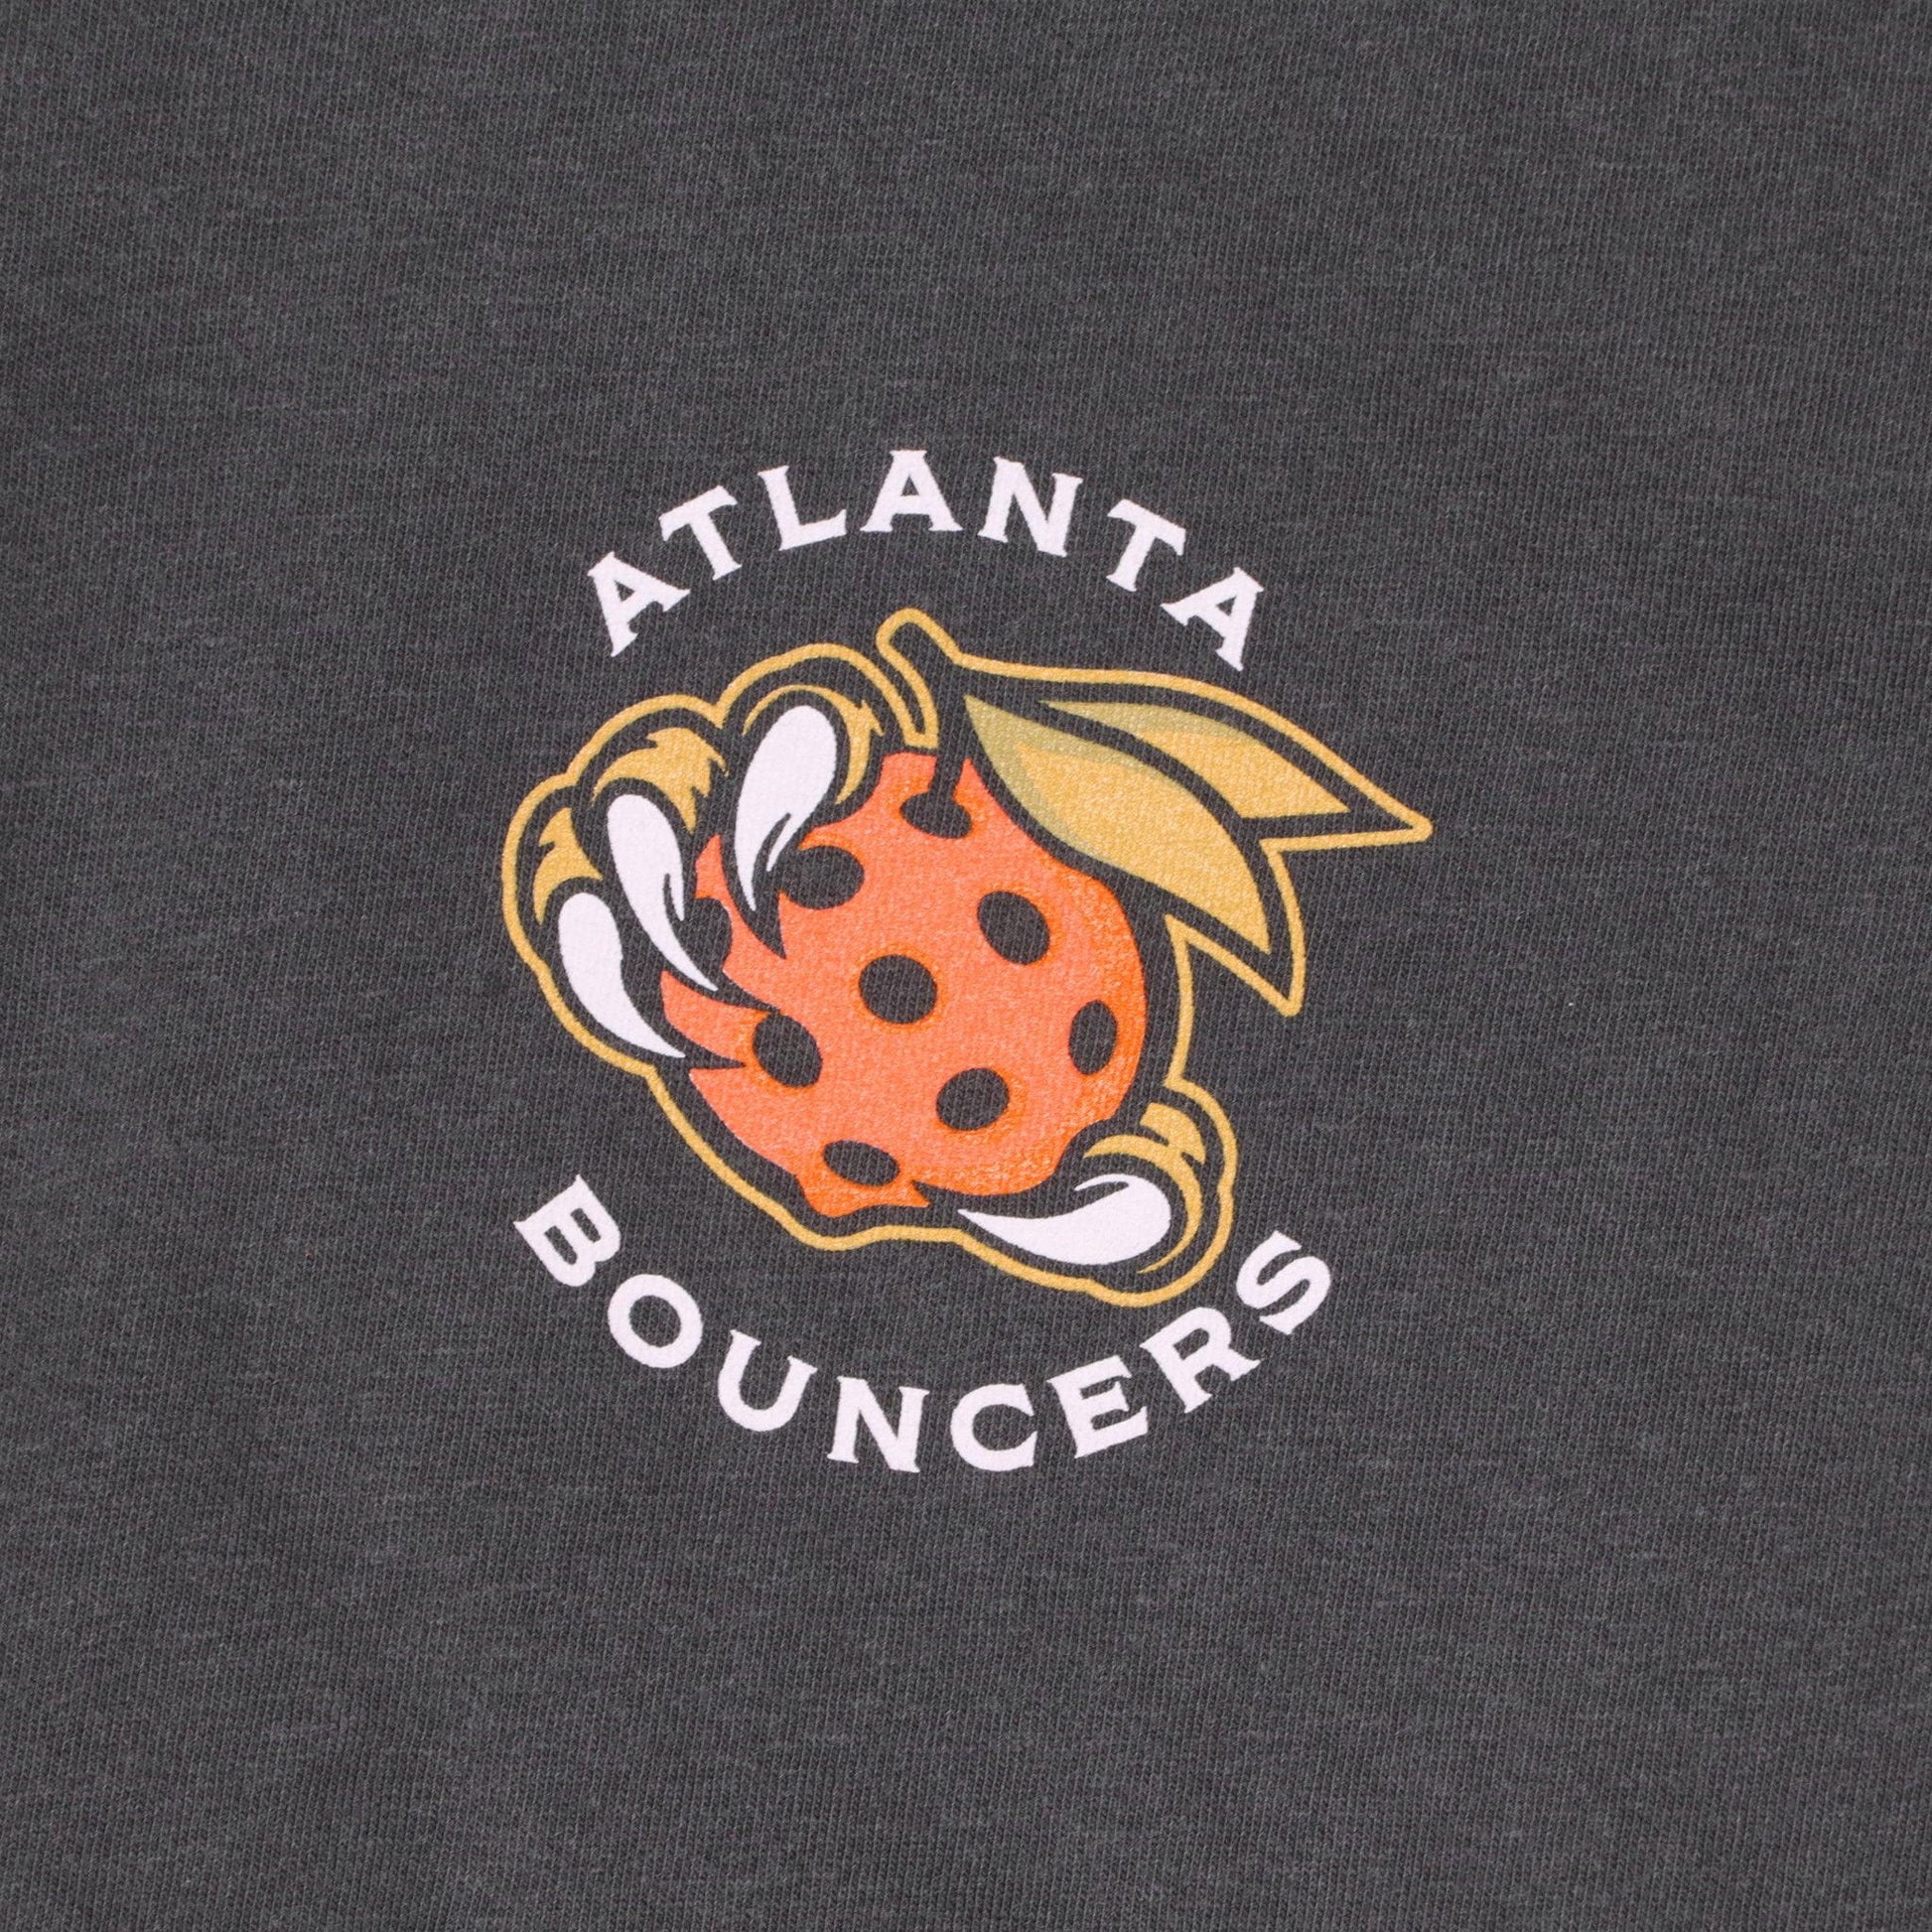 detail of the Atlanta bouncers logo 